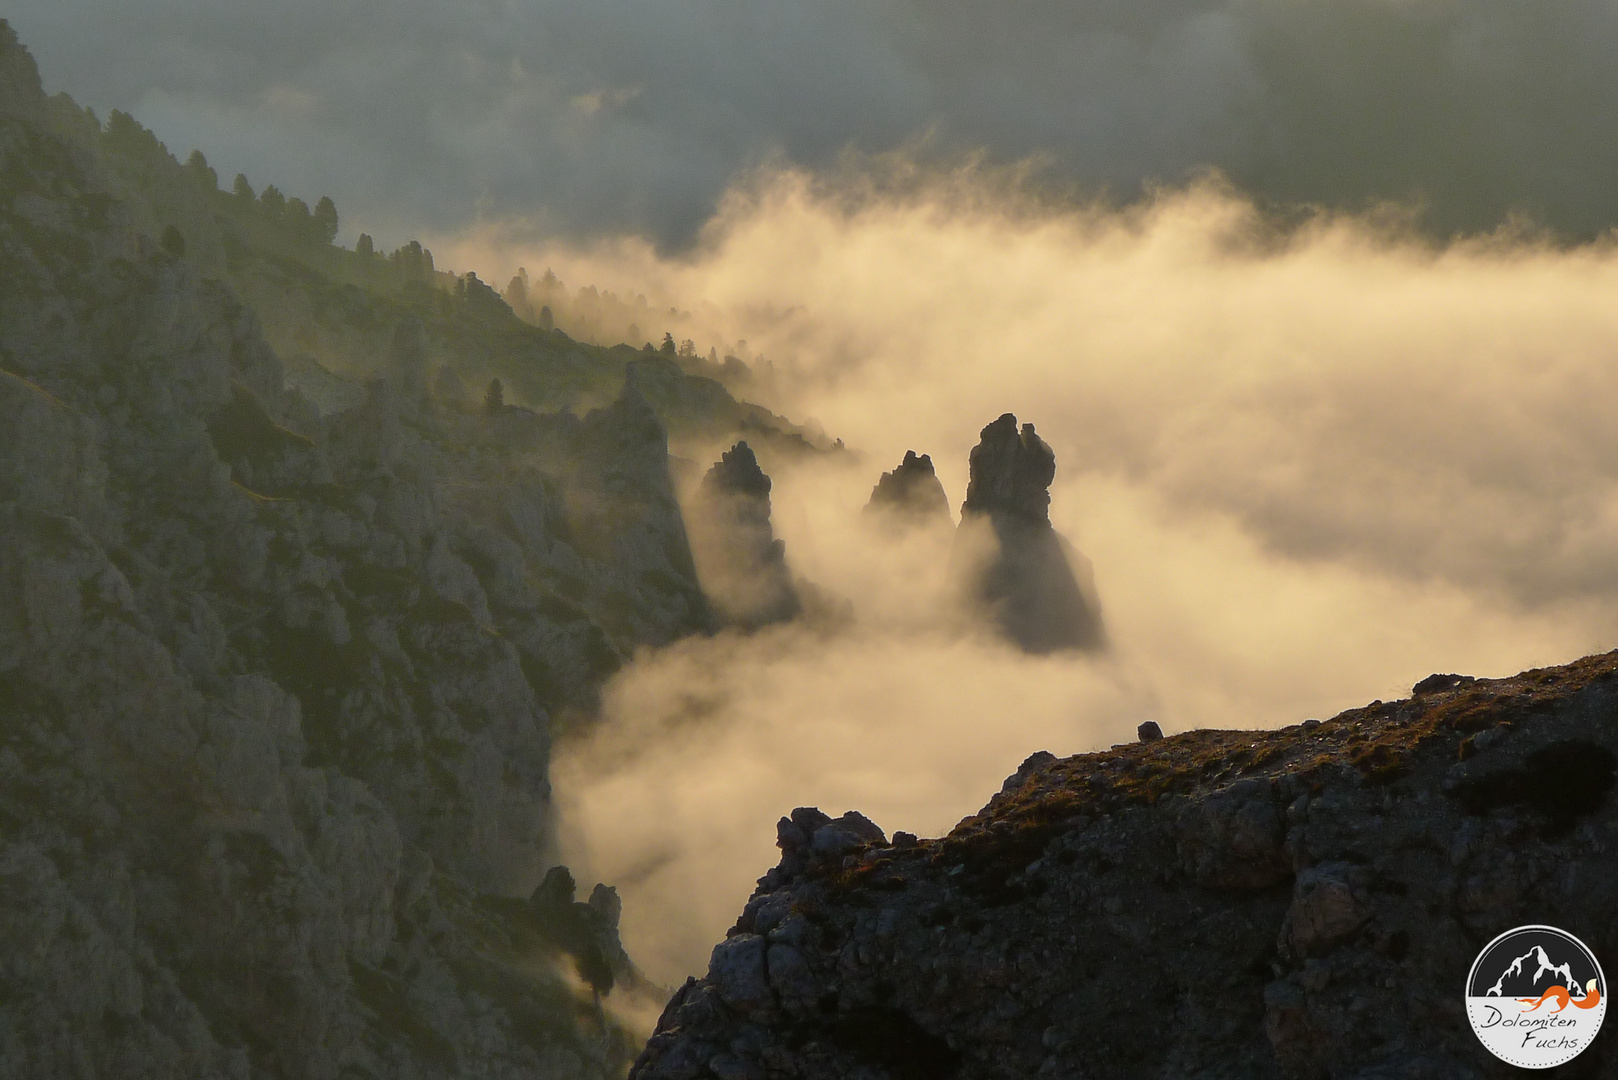 Dolomites - a mystery fog